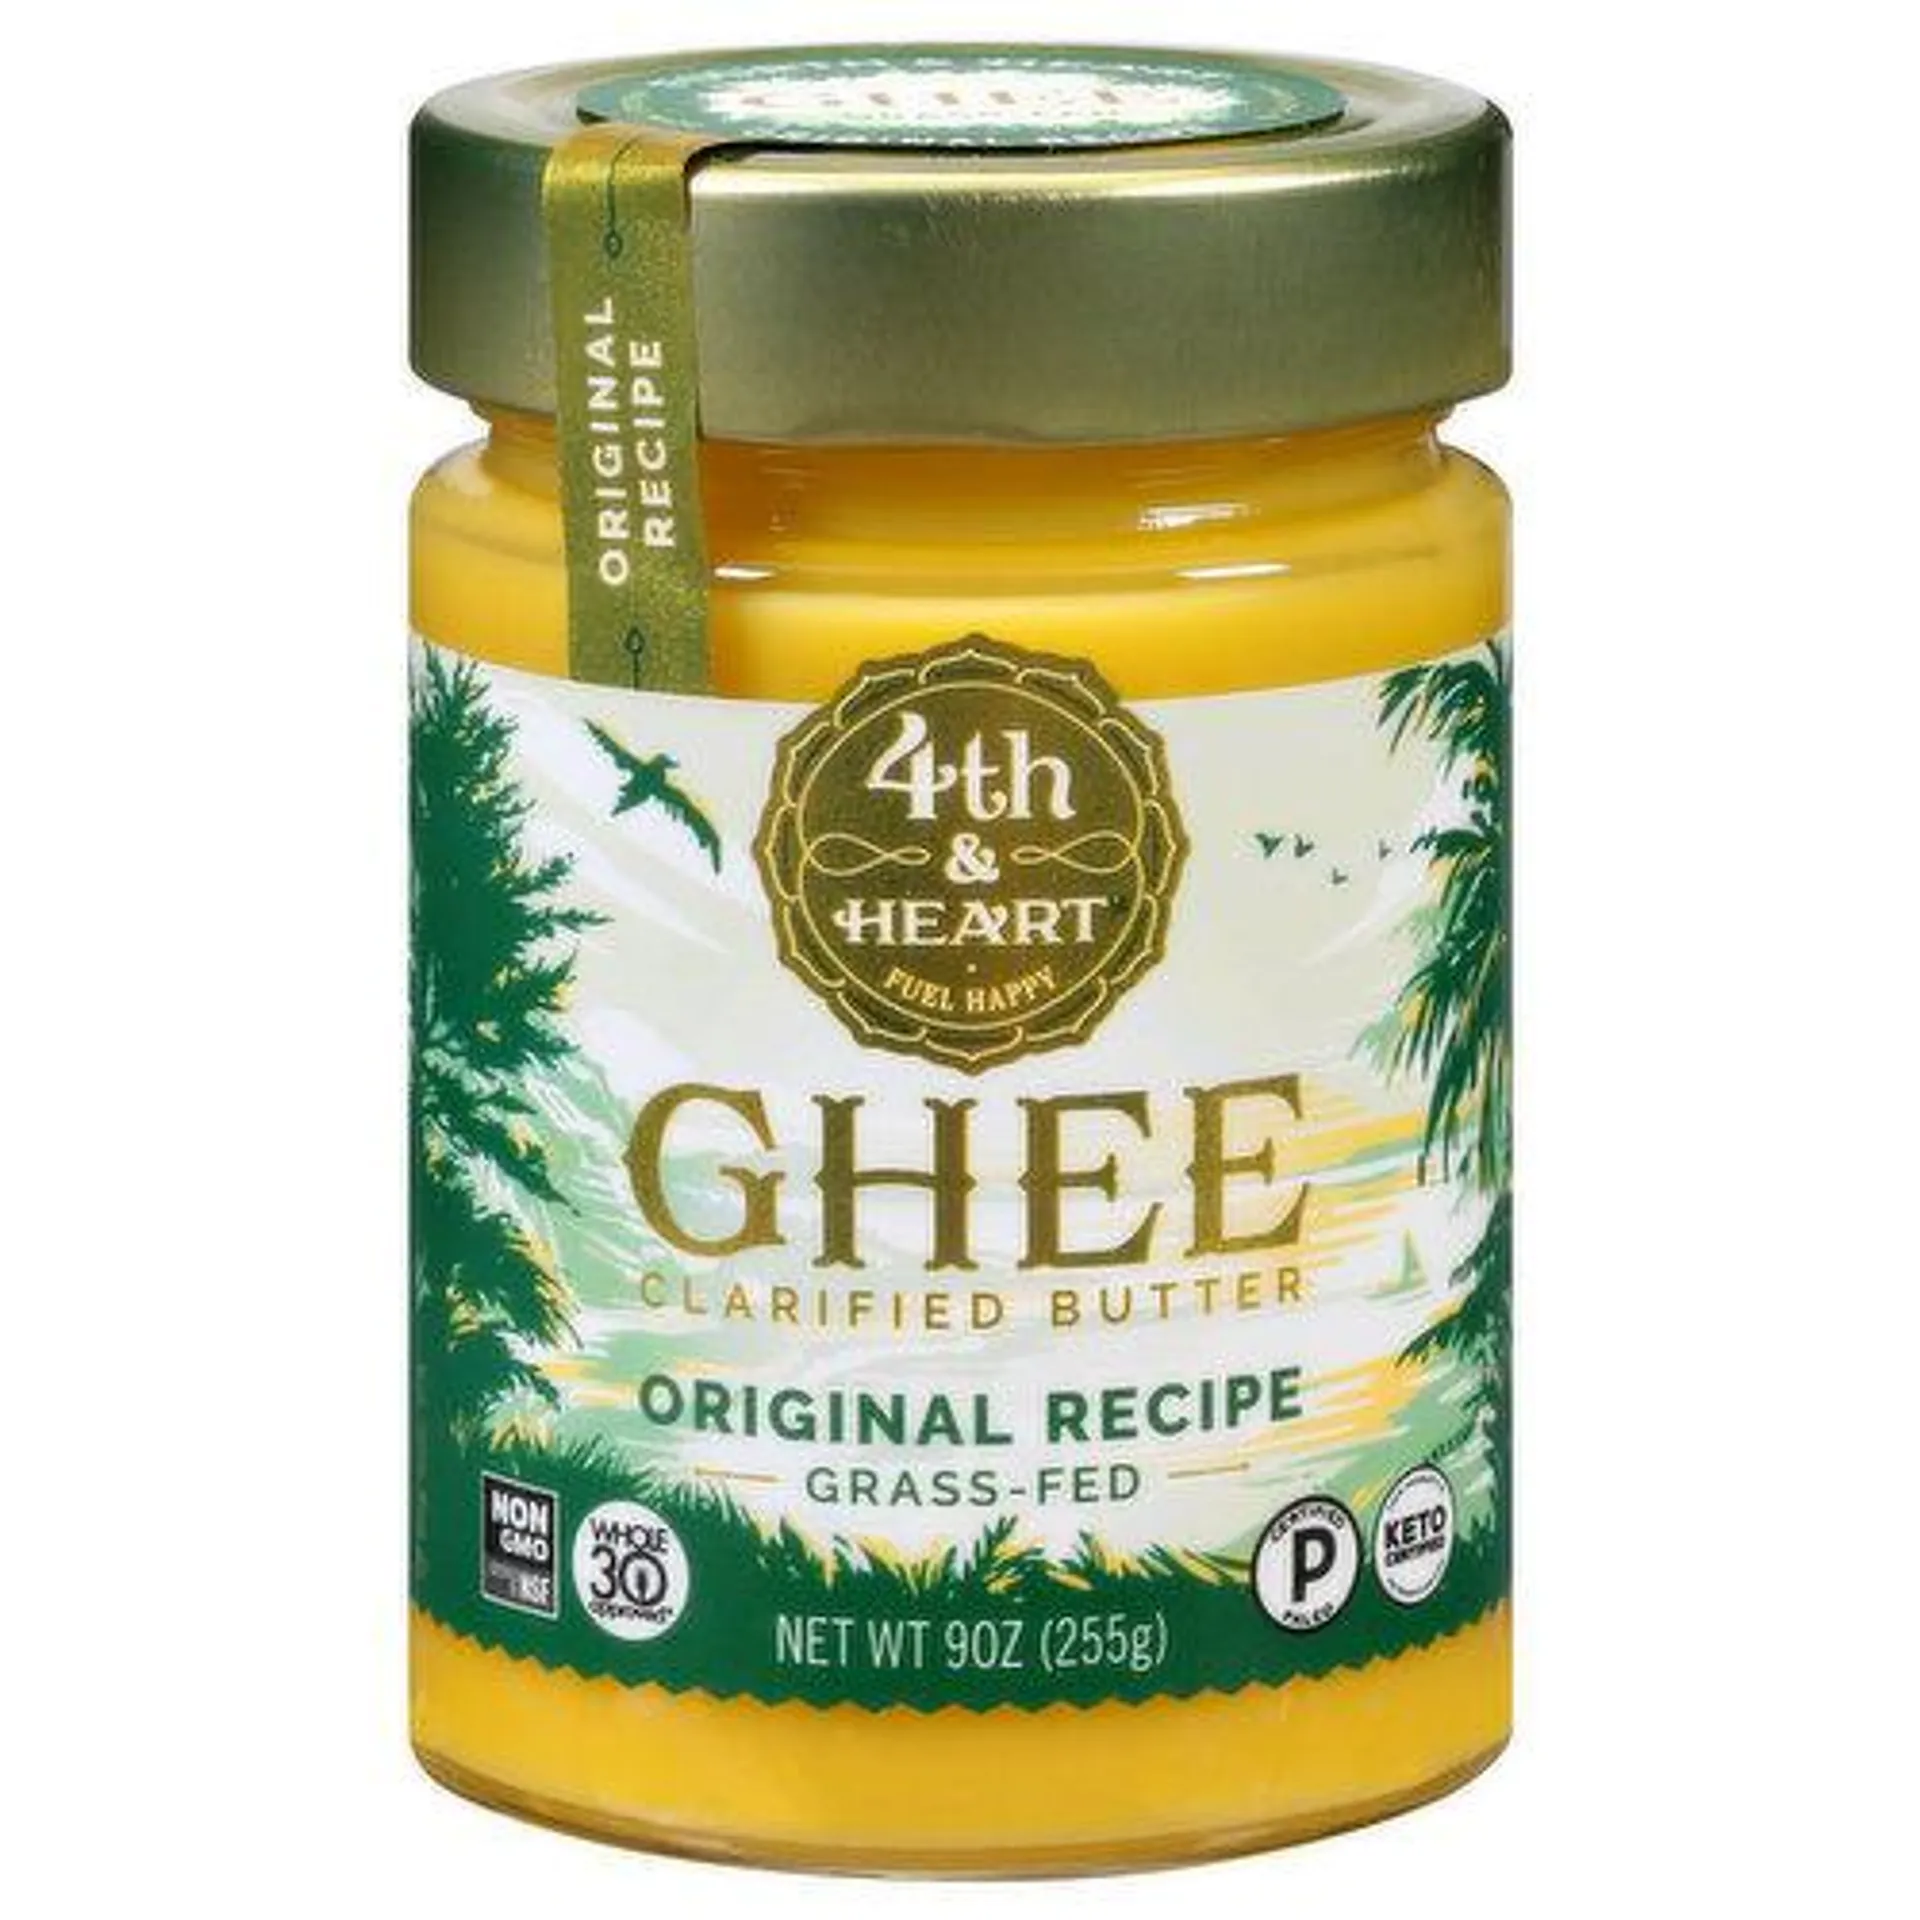 4th & Heart Ghee, Clarified Butter, Original Recipe - 9 Ounce